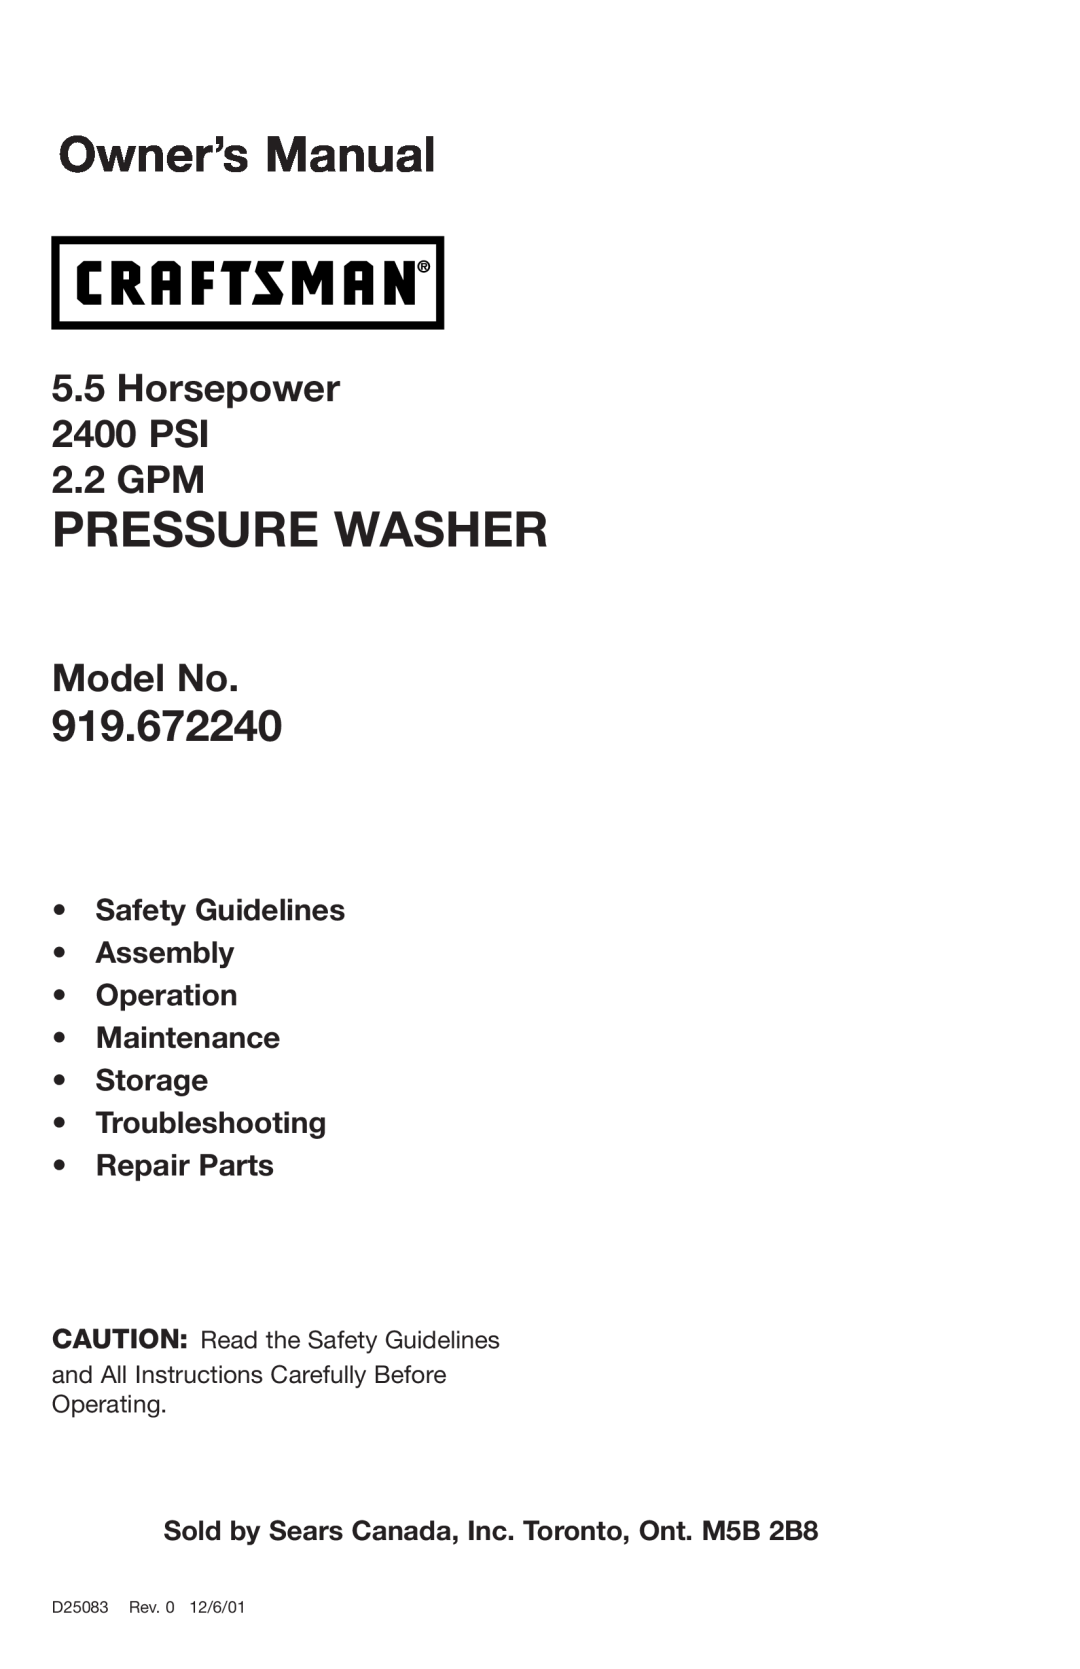 Craftsman 919.672240, D25083 owner manual Owner’s Manual, Pressure Washer, Horsepower 2400 PSI 2.2 GPM, Model No 